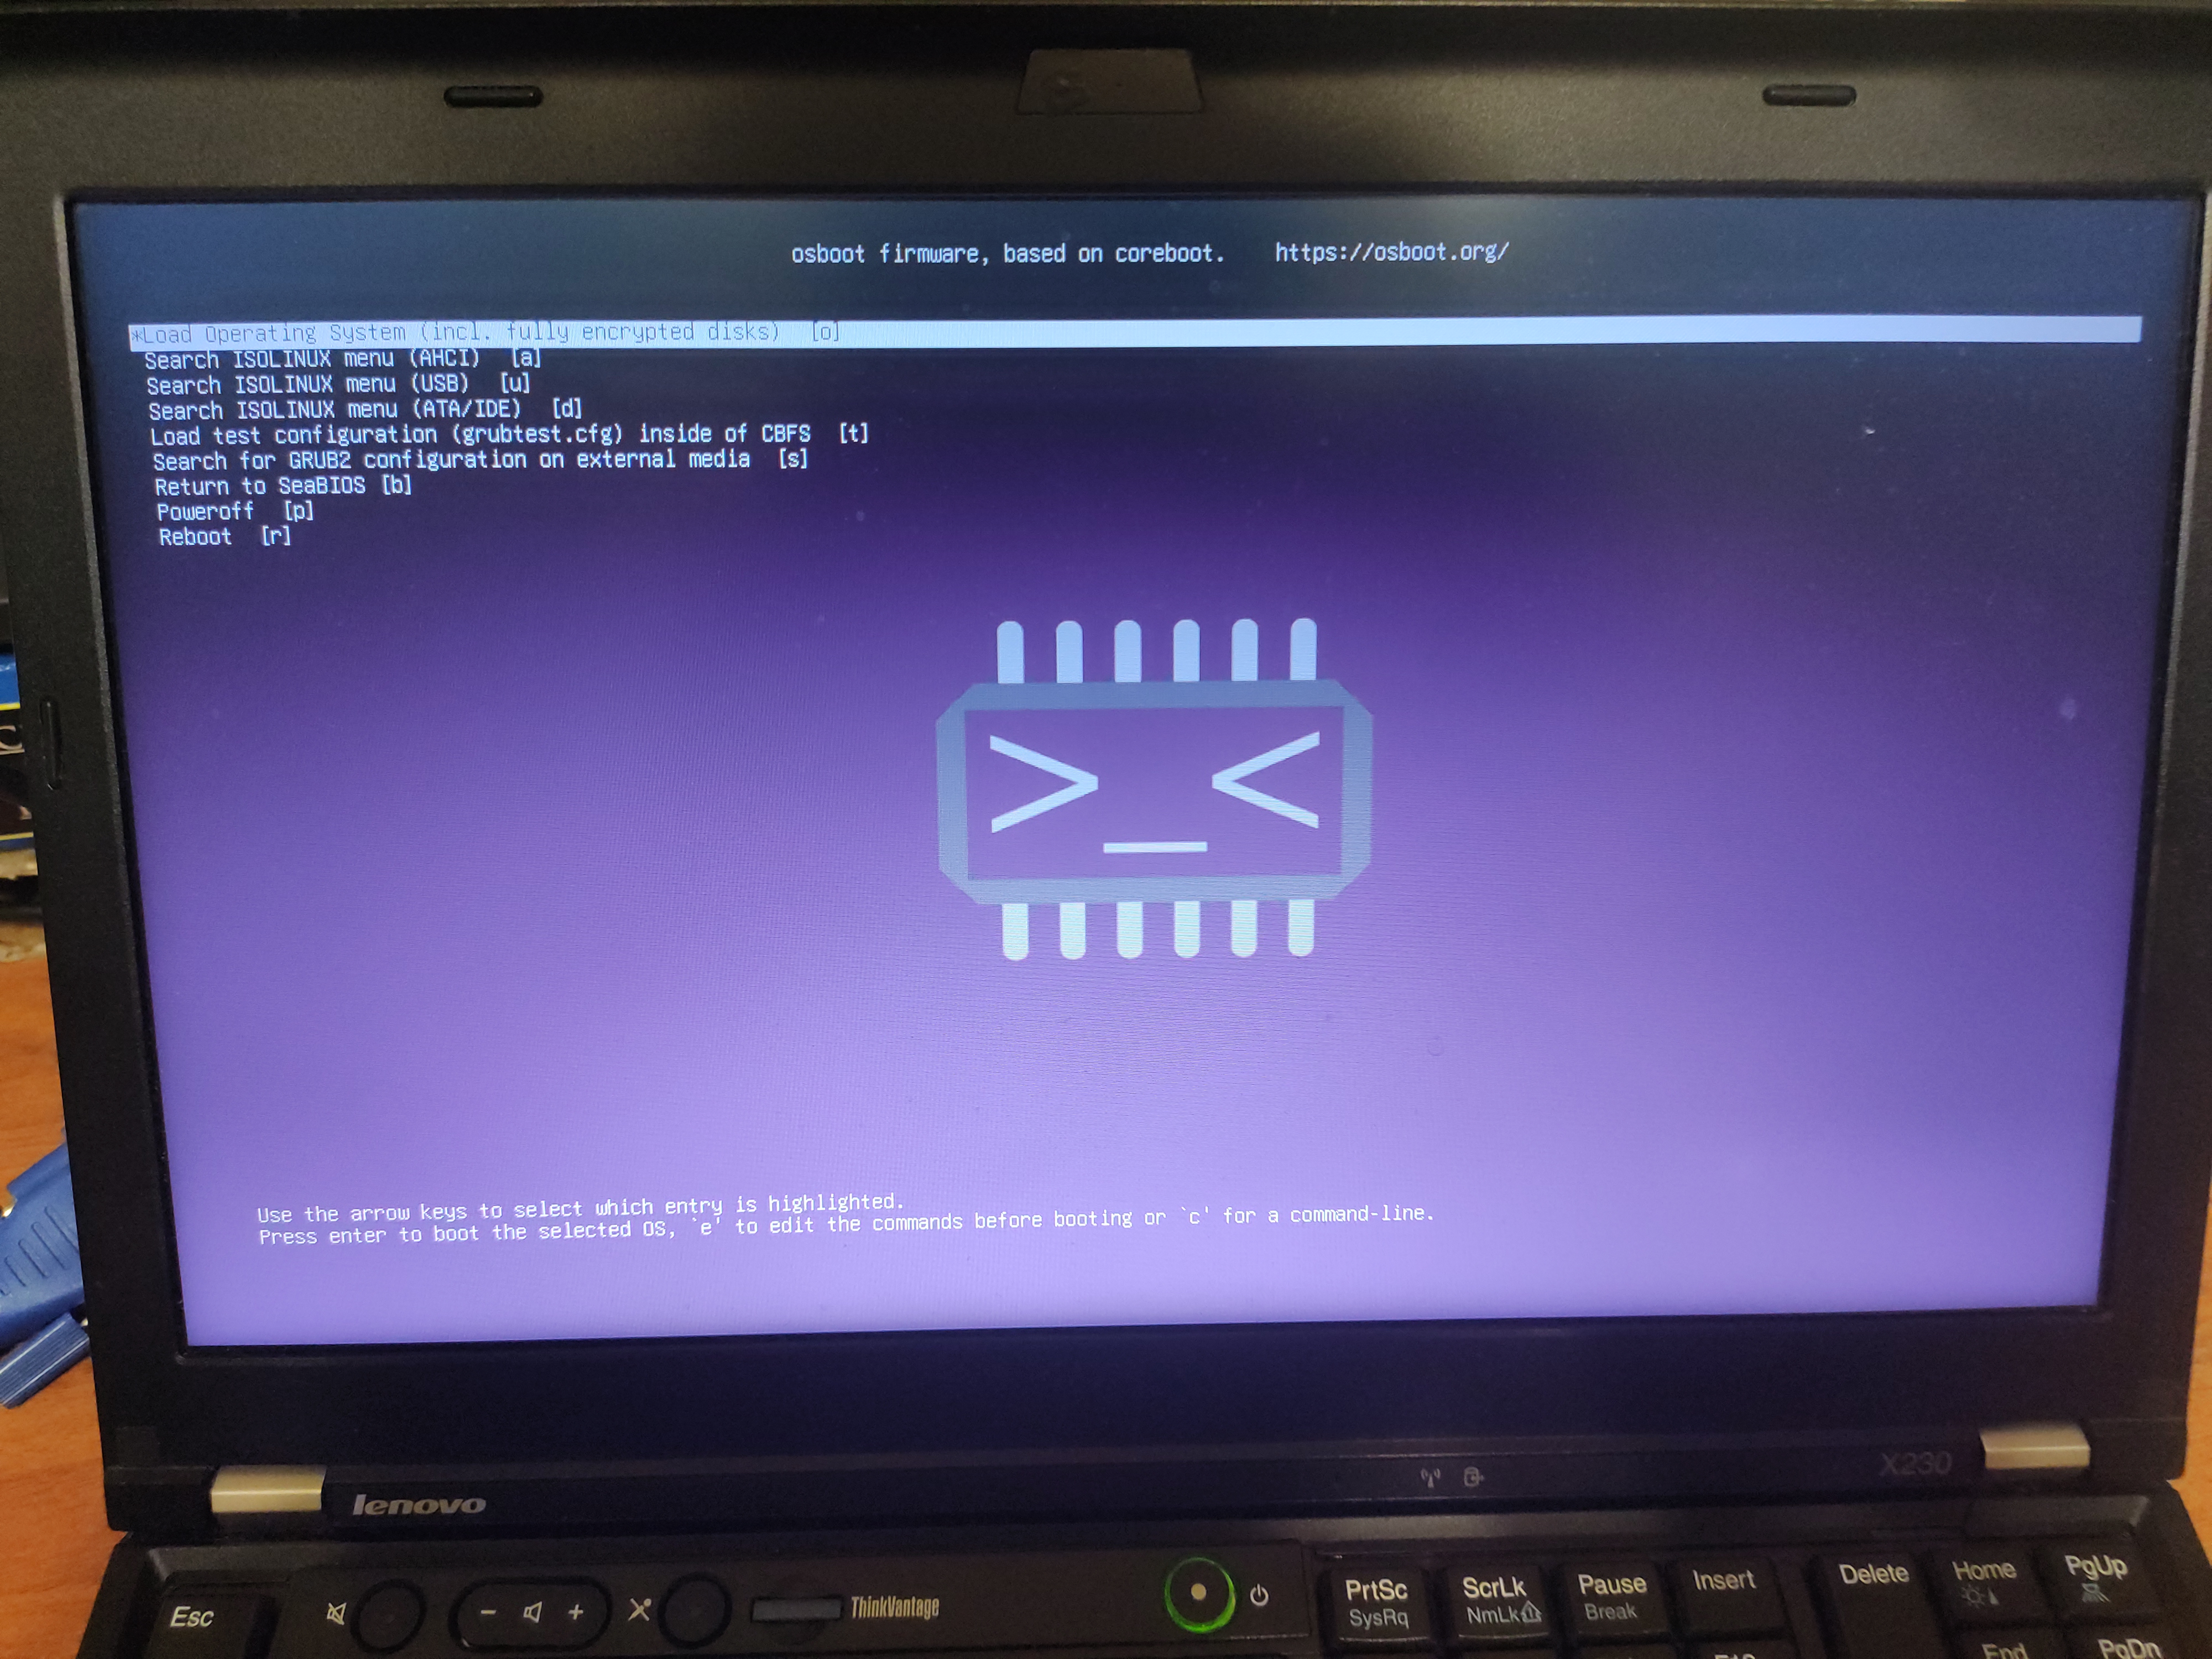 ThinkPad X230 с Coreboot дистрибутивом Osboot (ныне Libreboot). В качестве загрузчика используется GRUB2)